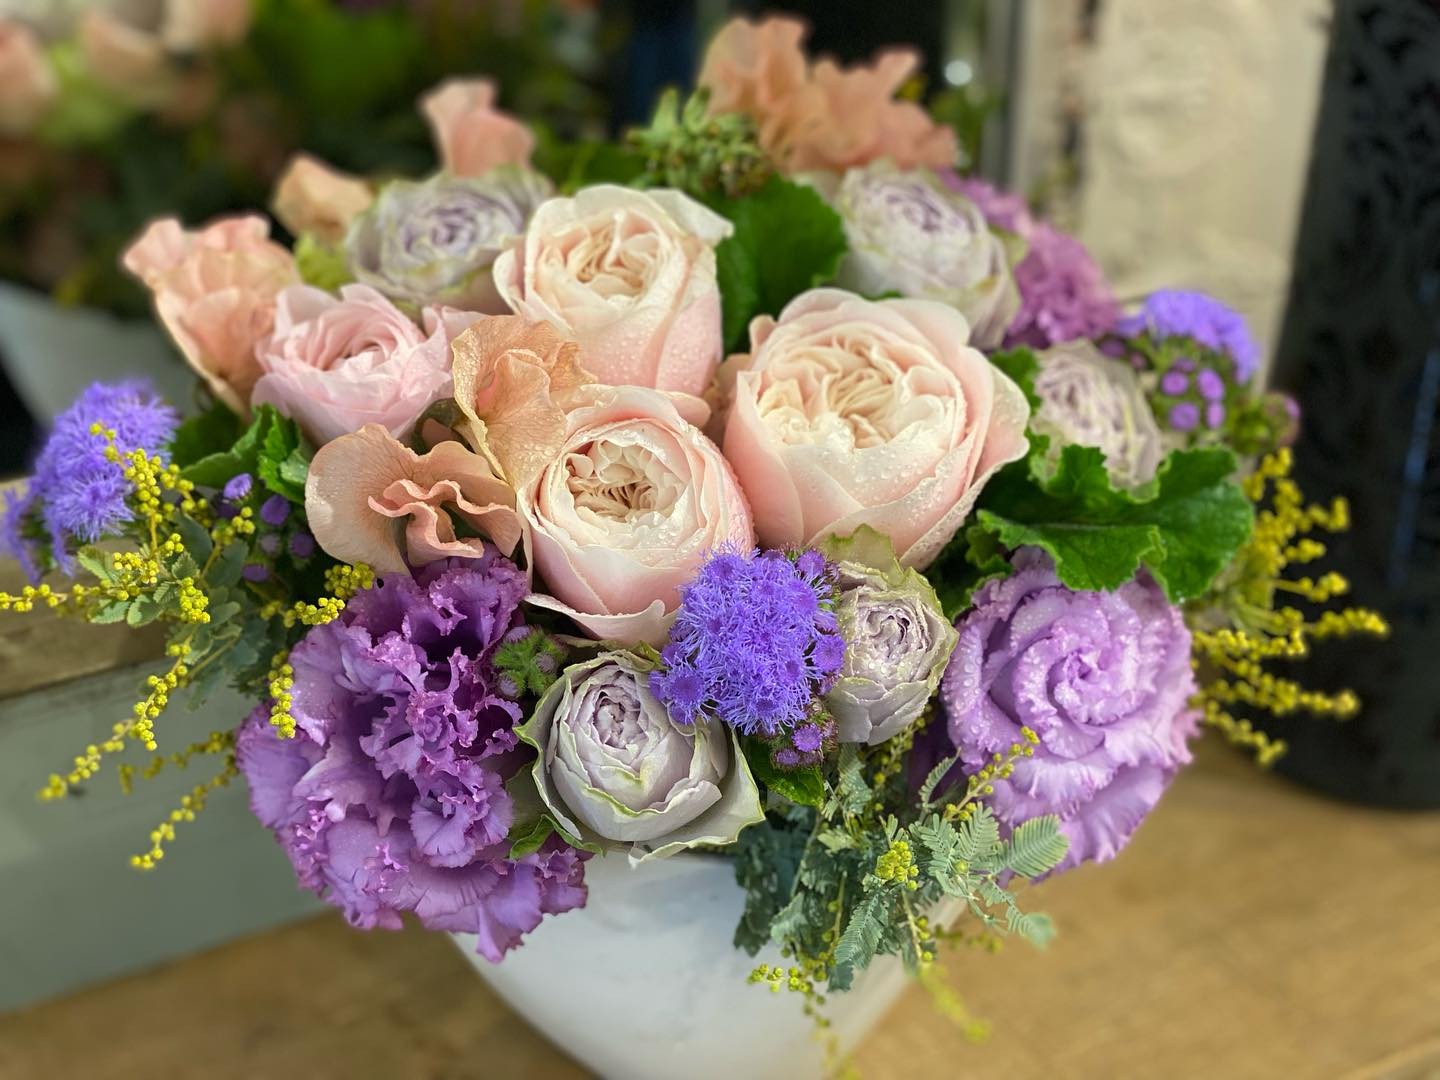 ..Birthday arrangementバラとラナンキュラスをいれて。おめでとうございます！電話、メール、ウェブサイトでご注文できます。.︎ 052-261-8791︎ kazuto@posy-nagoya.co.jp.